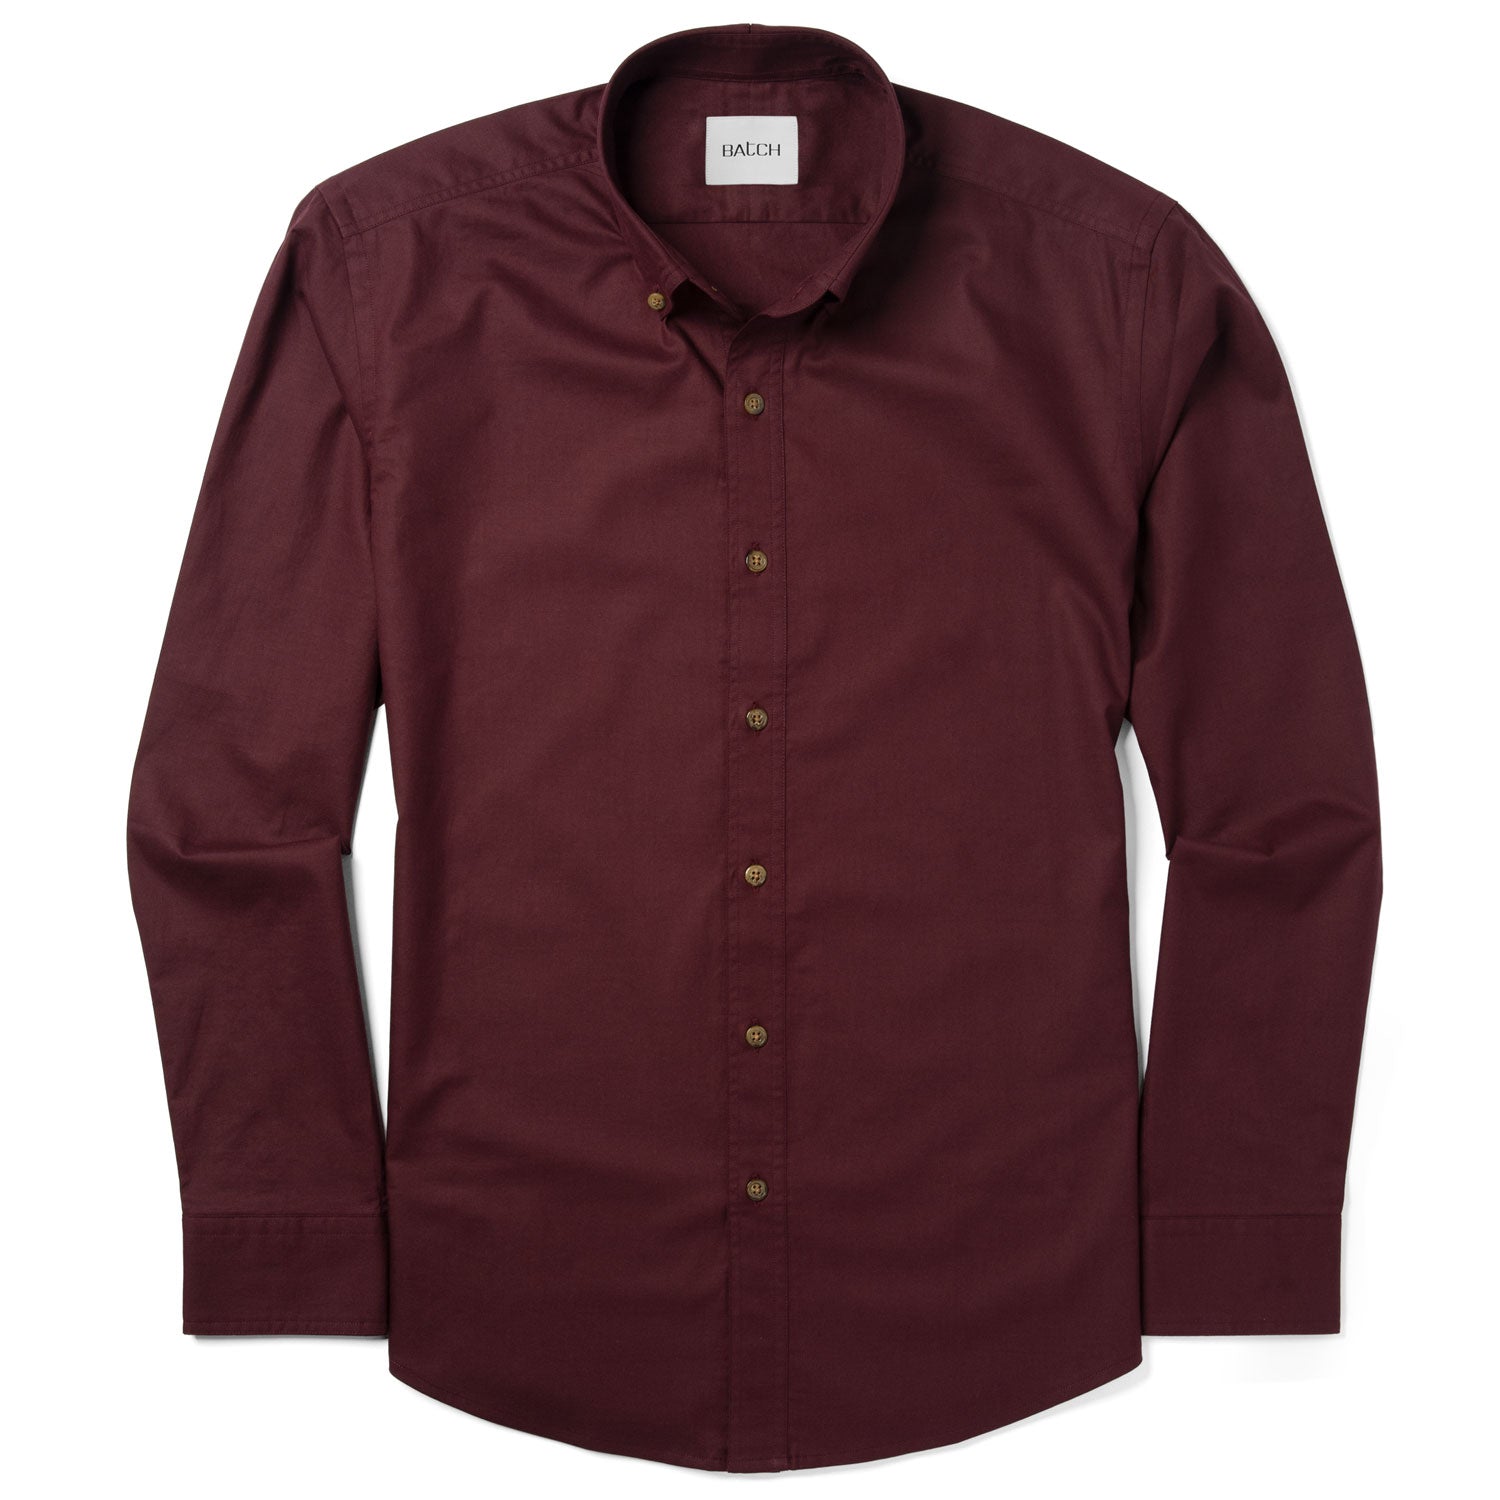 Essential Casual Shirt - Burgundy Cotton Twill